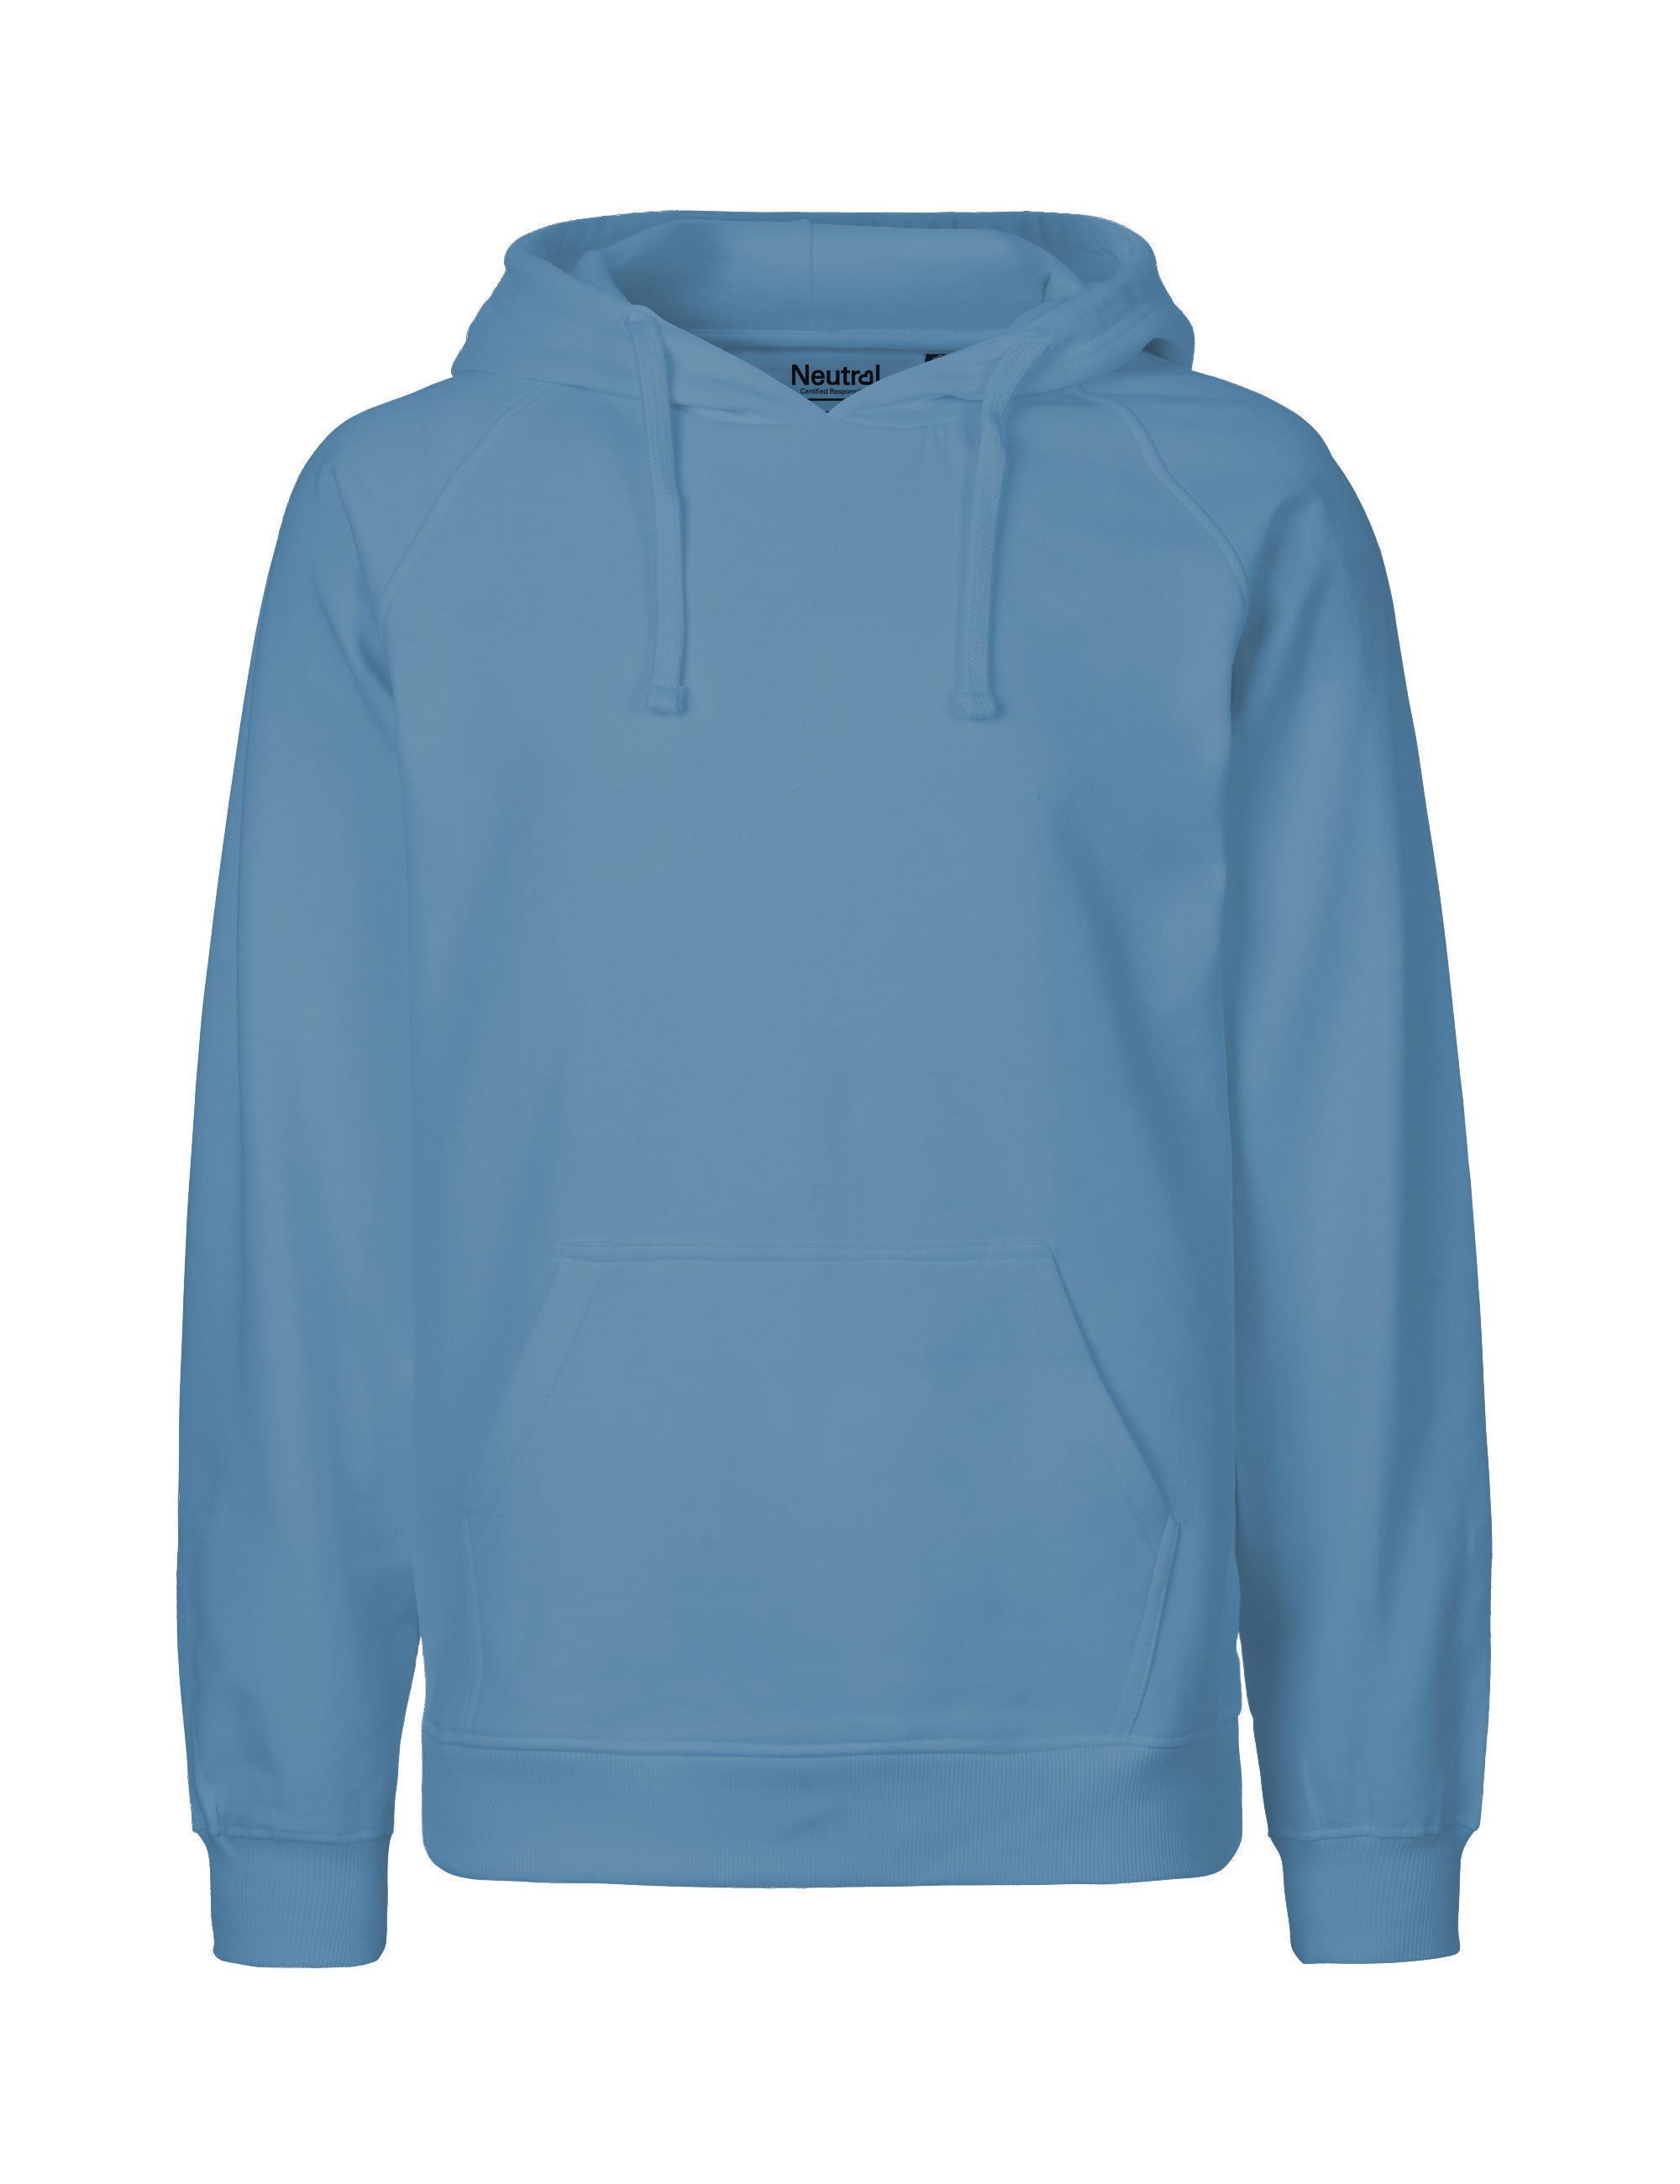 Organic Fairtrade men's hoodie 300 g/m² Neutral® Dusty Indigo 3XL